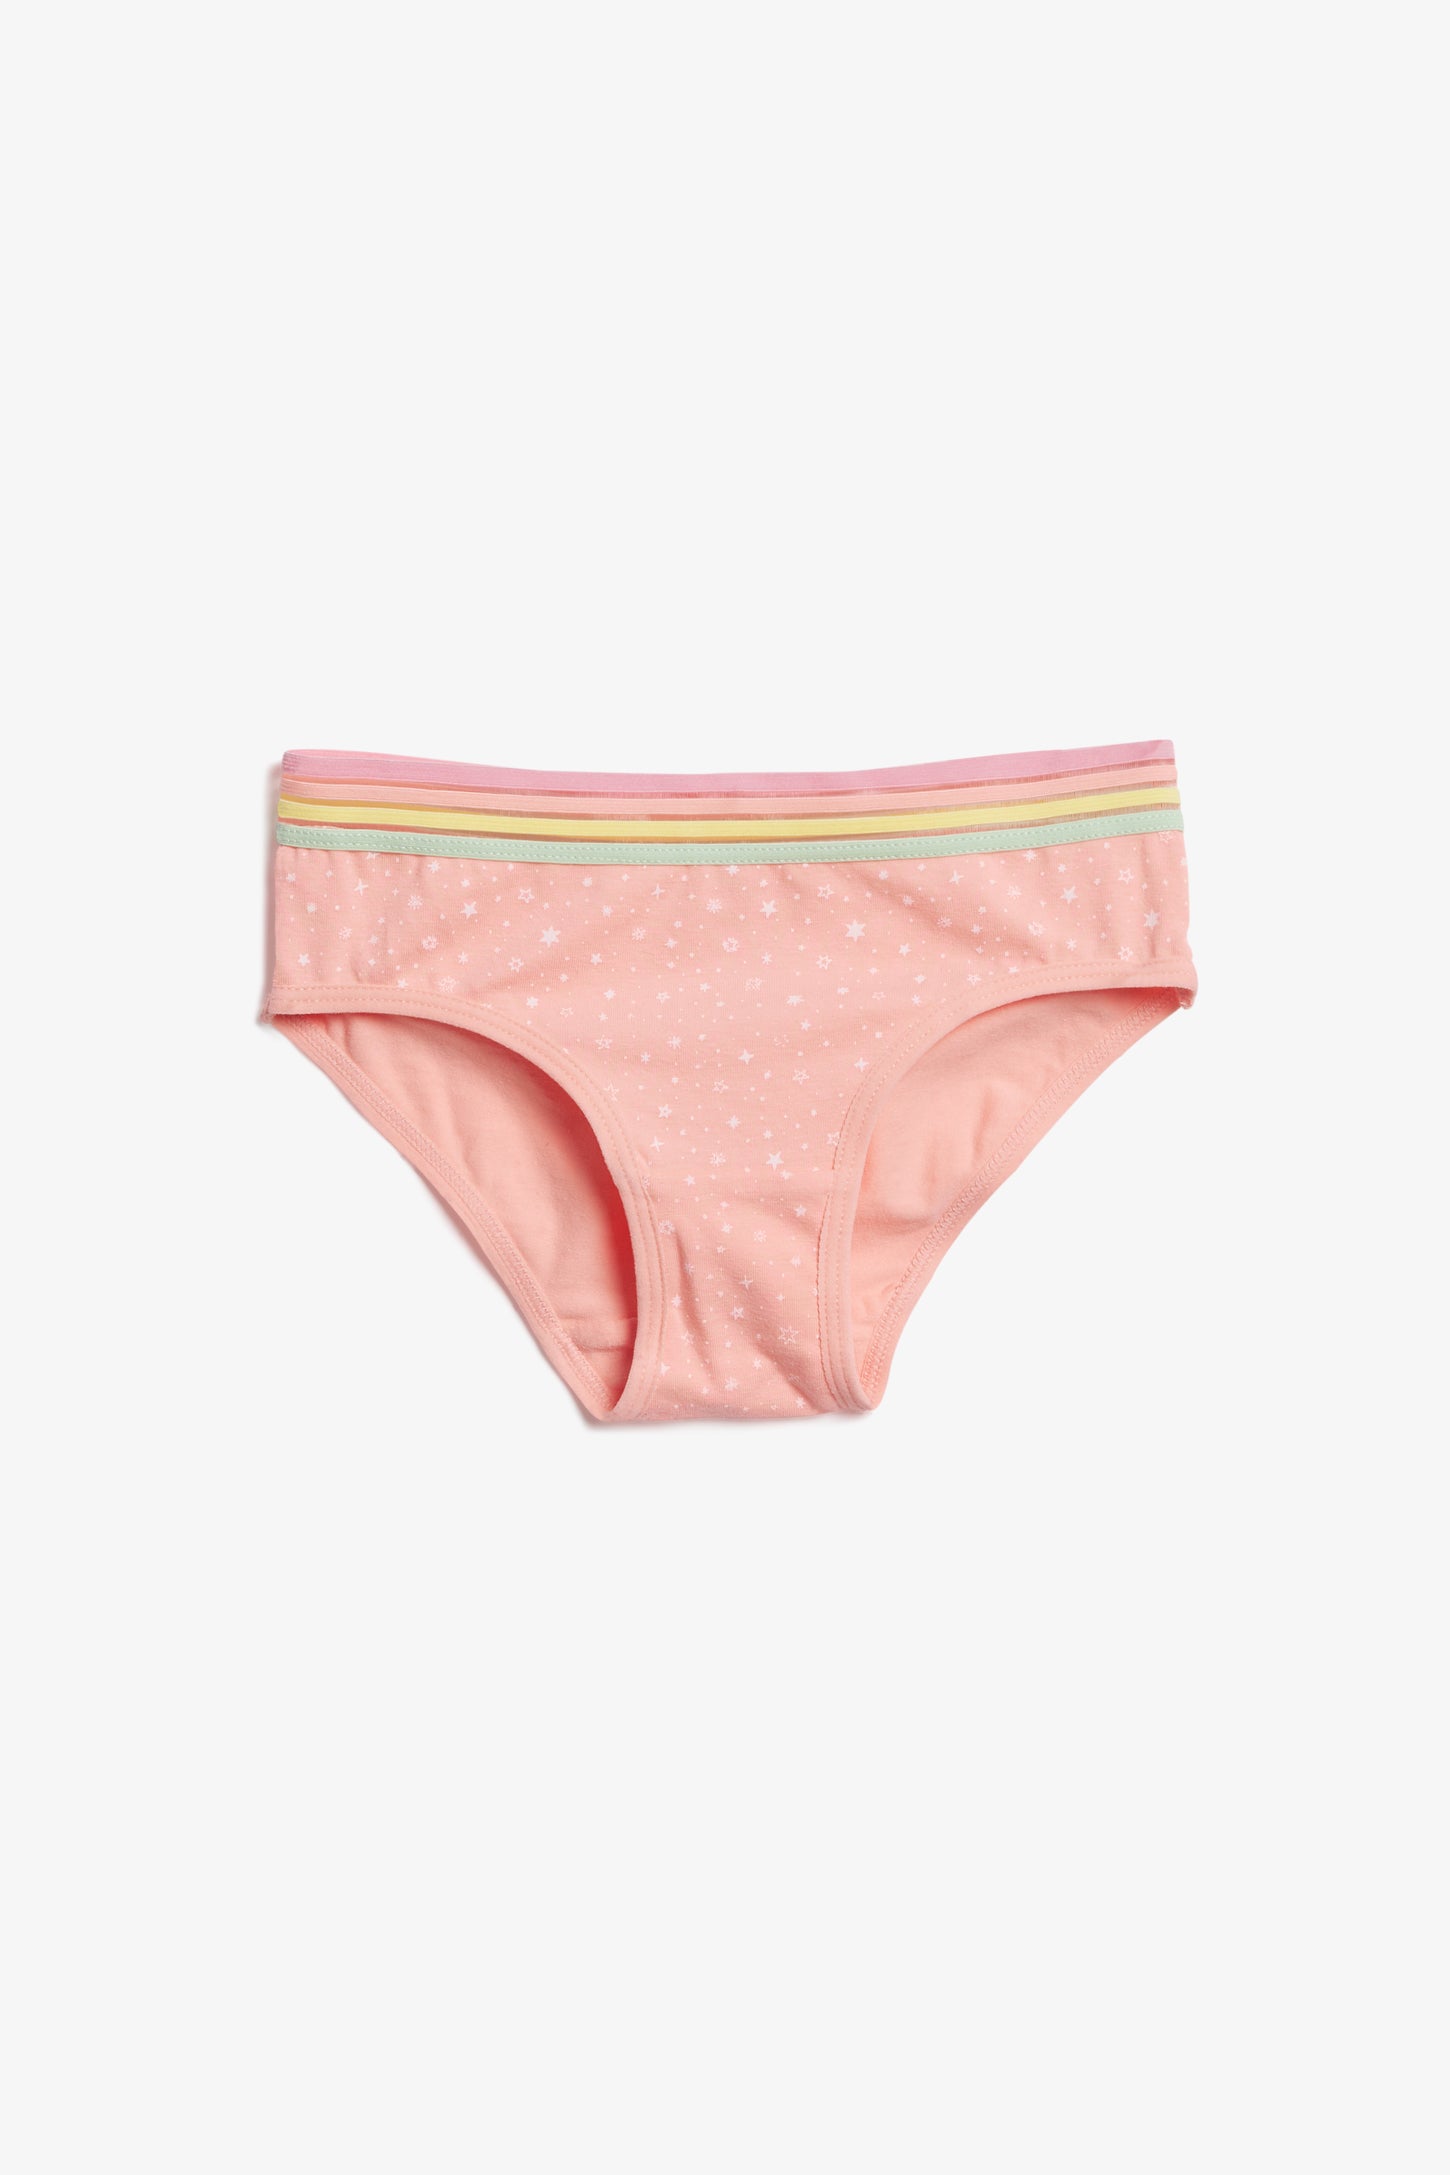 Culotte bikini arc-en-ciel, 4/20$ - Enfant fille && PECHE